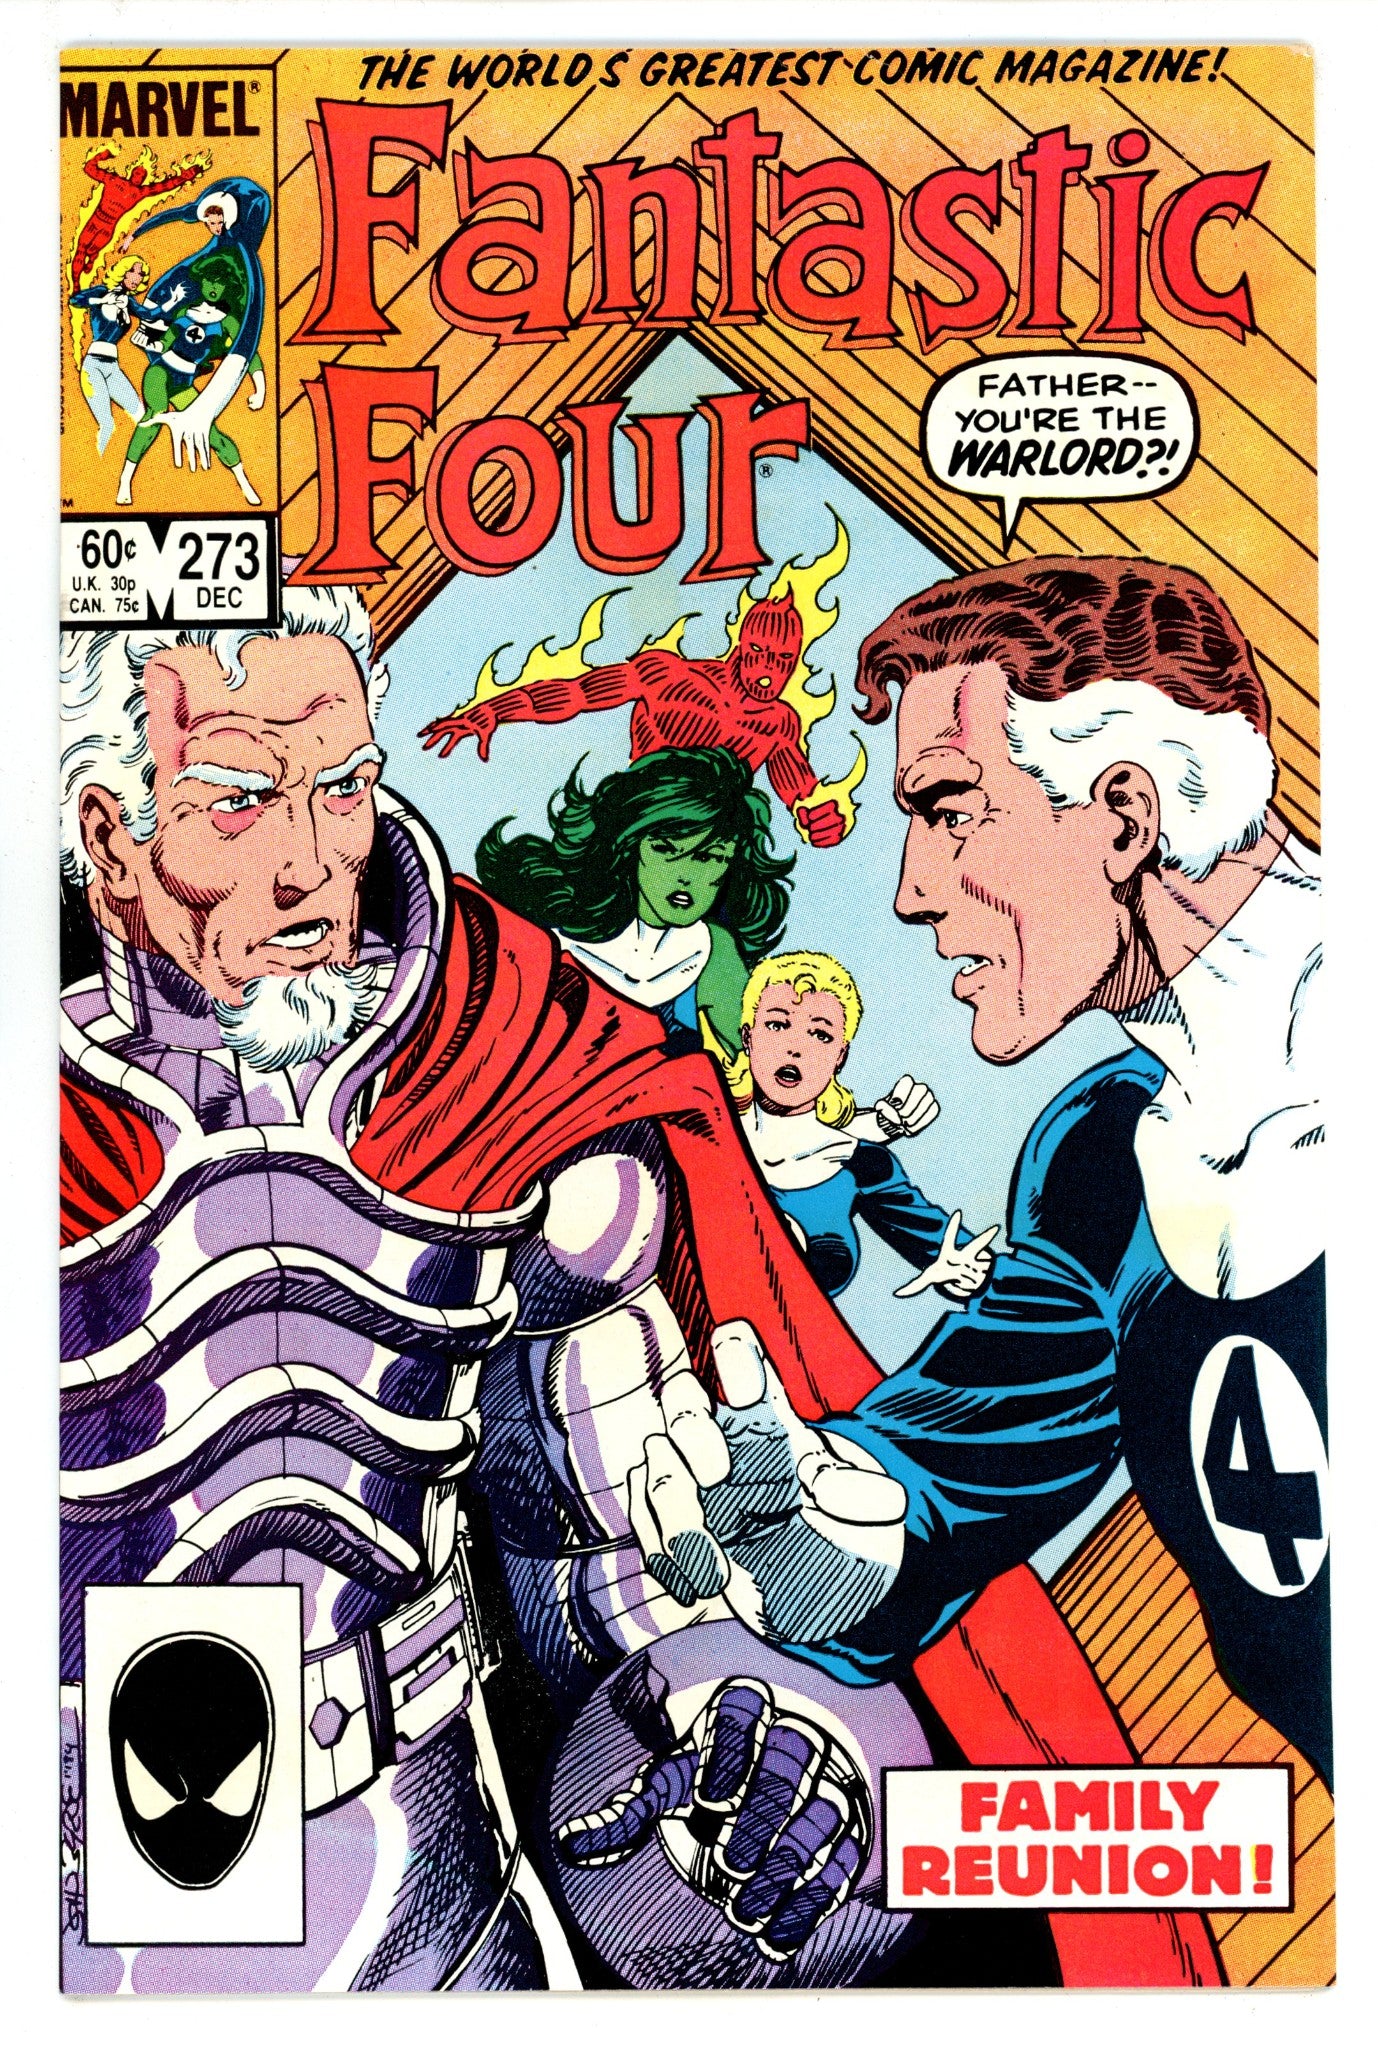 Fantastic Four Vol 1 273 VF/NM (9.0) (1984) 